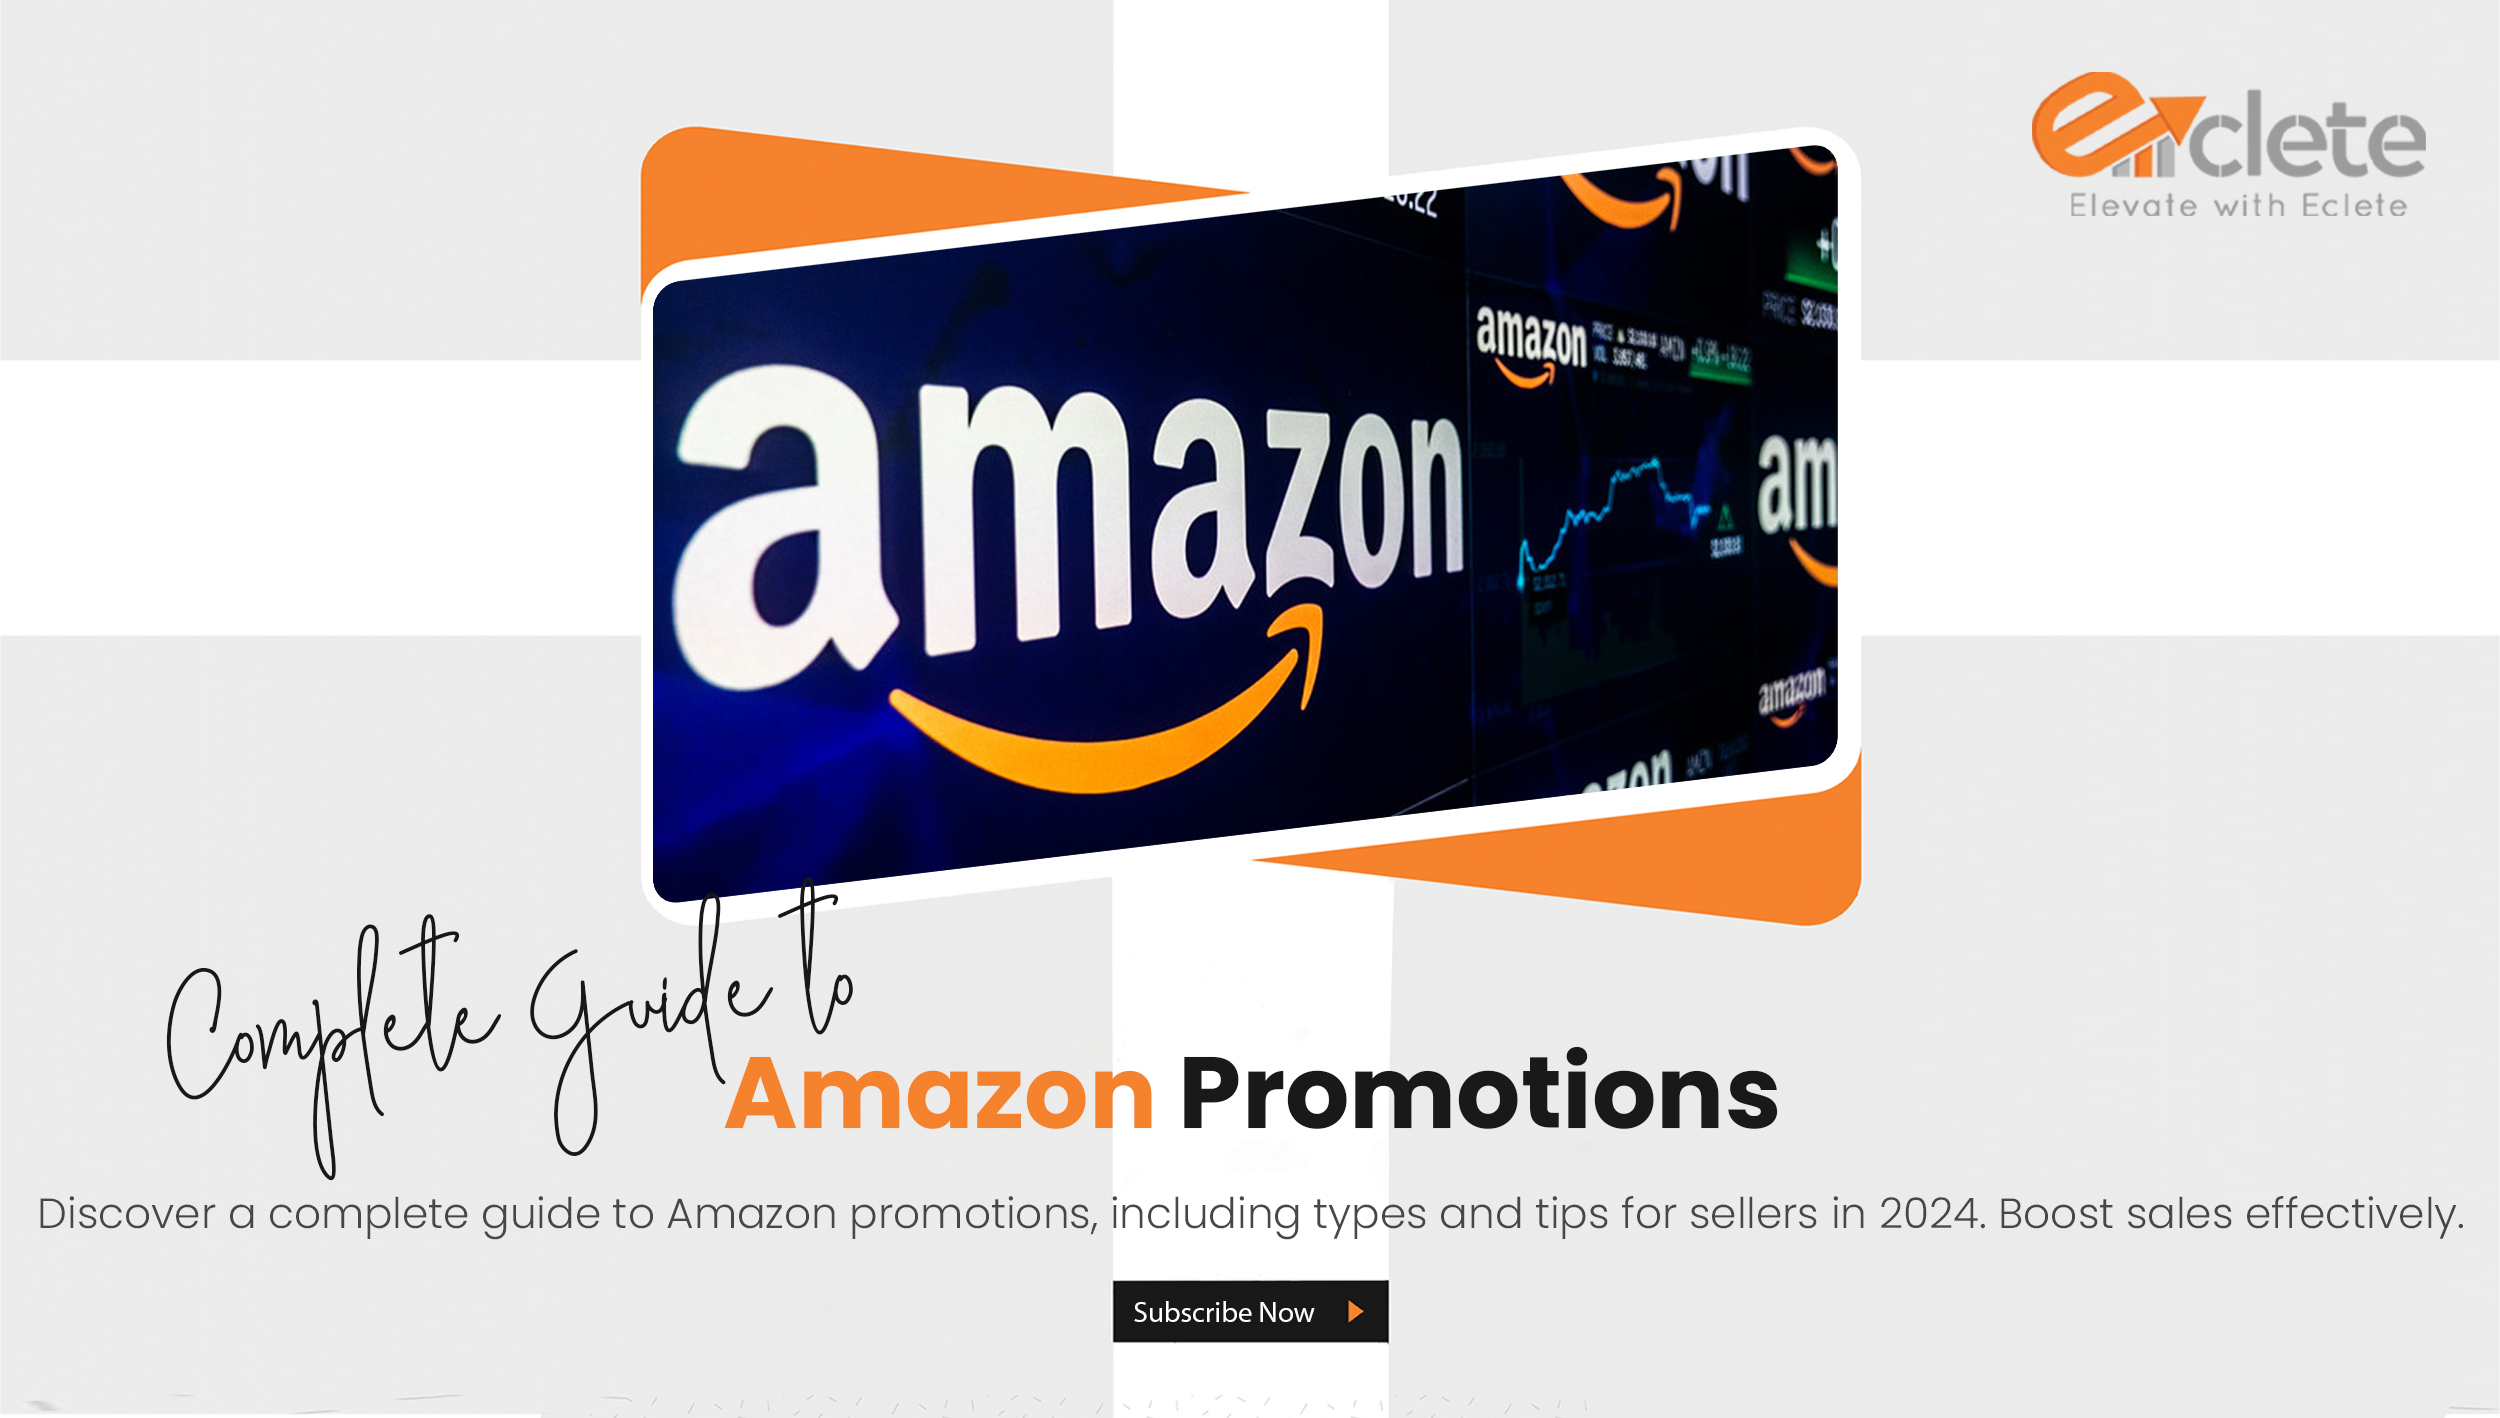 Amazon Promotions